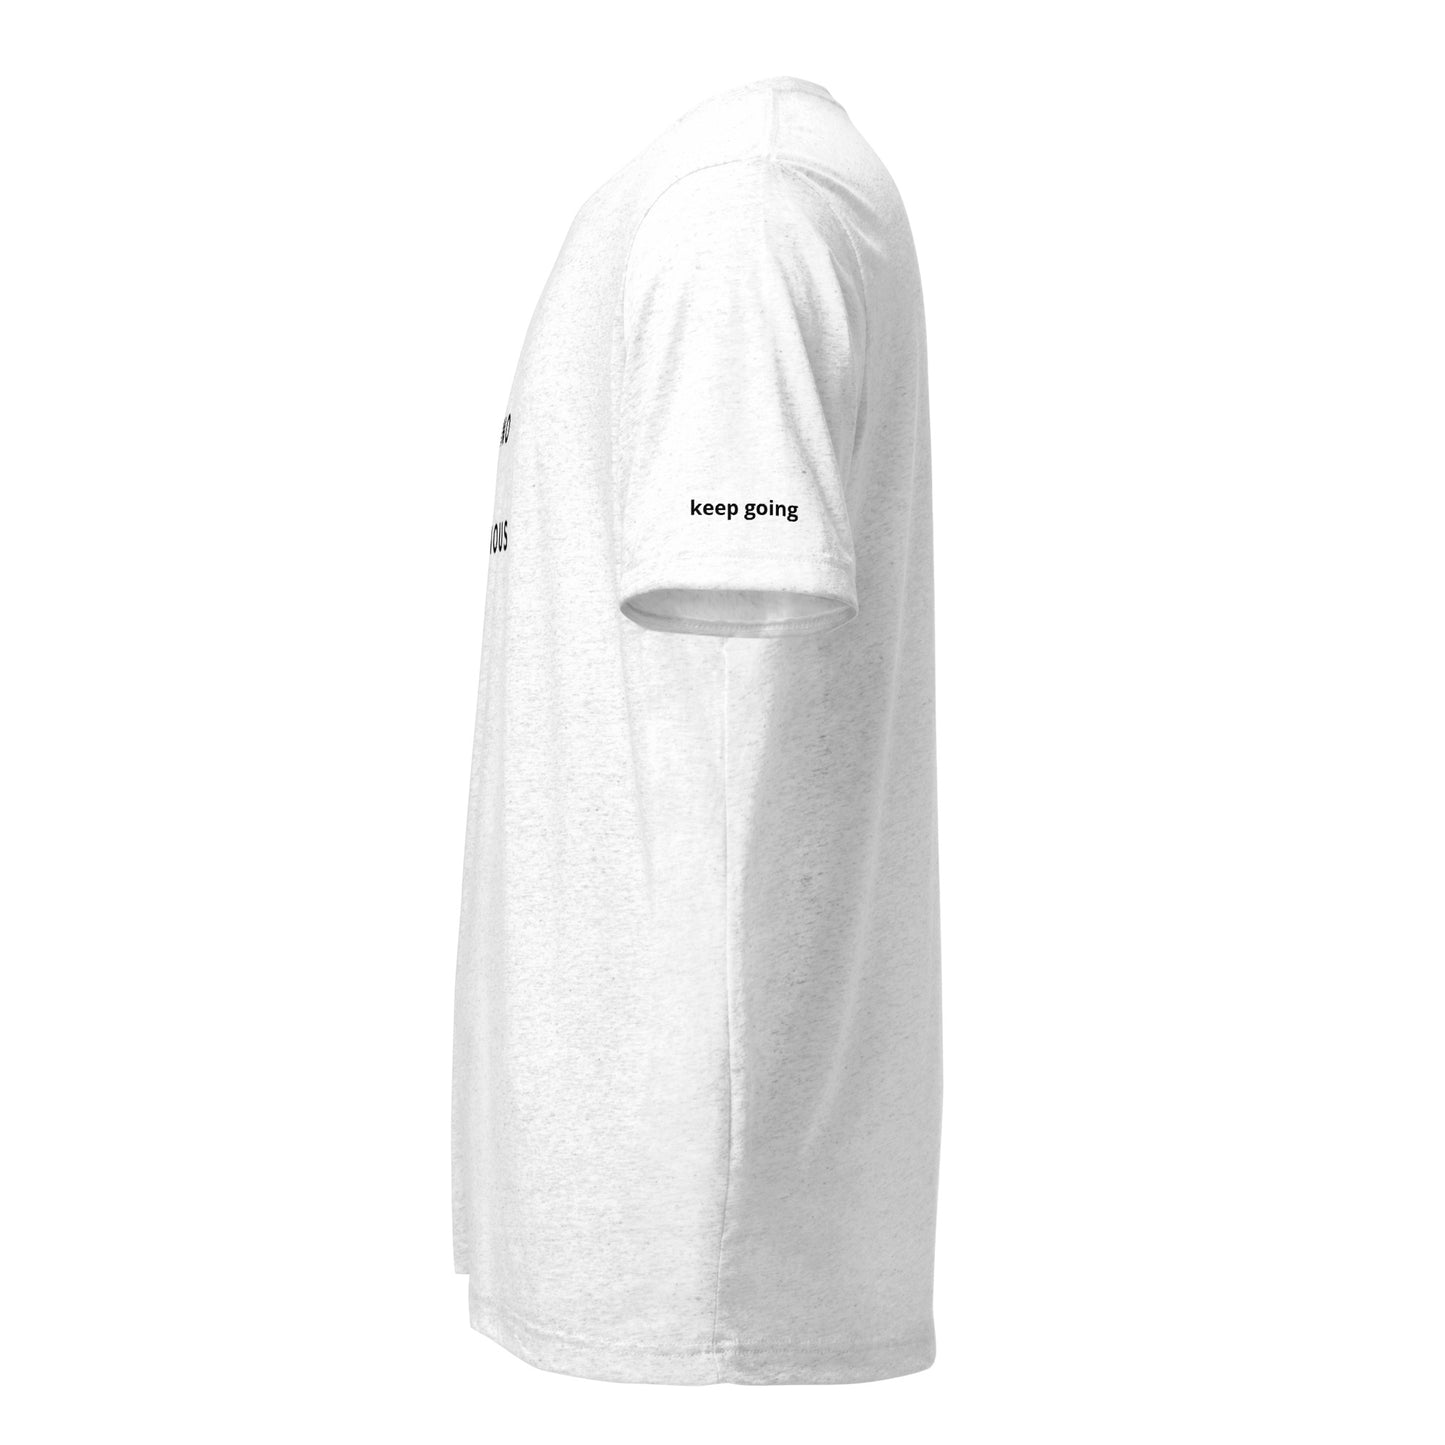 LATINO + AMBITIOUS Short sleeve t-shirt (white)